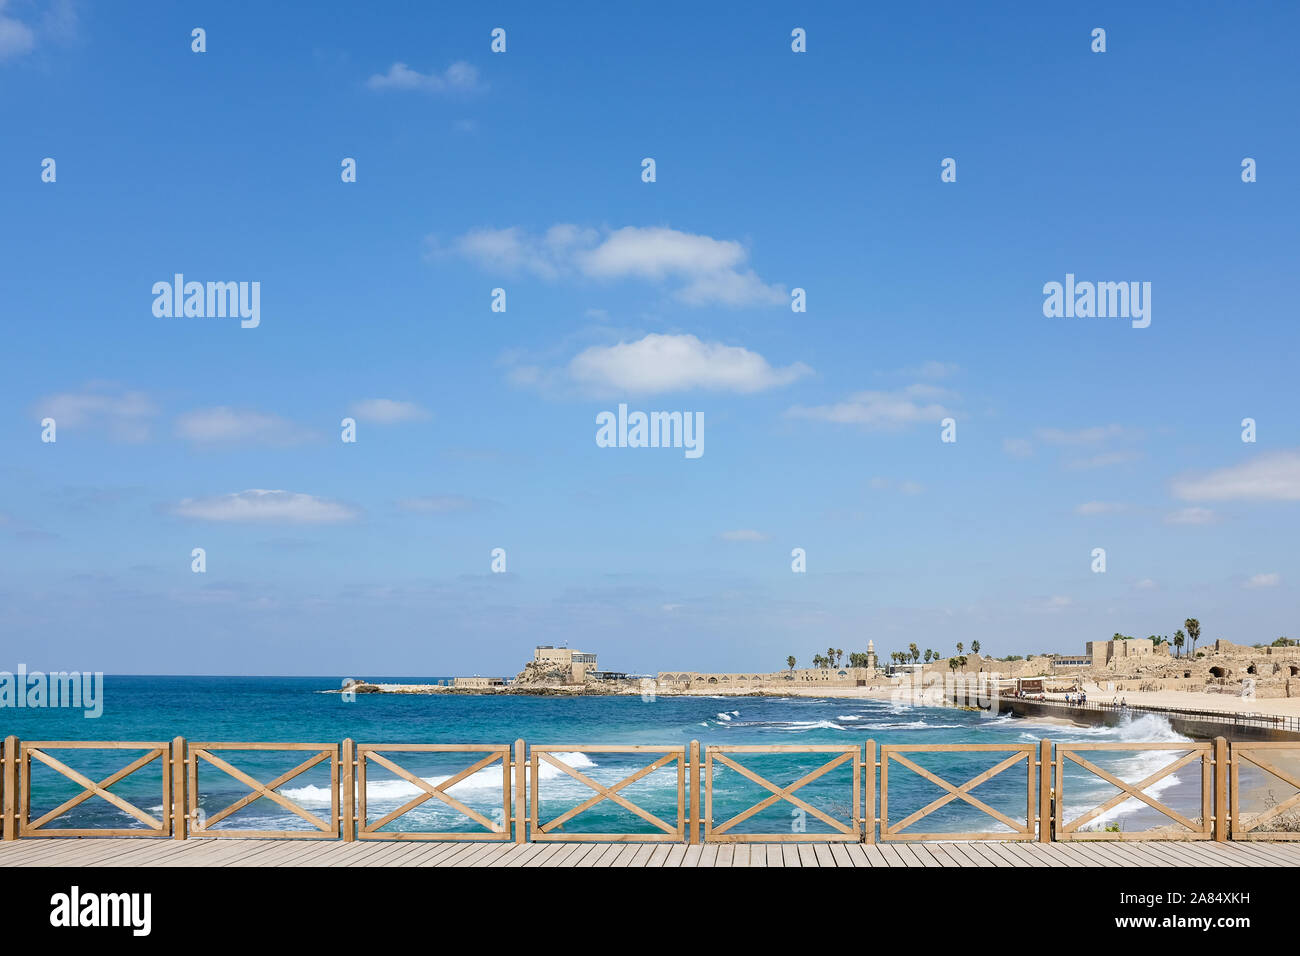 Wooden railings overlooking the sea at Caesarea Stock Photo